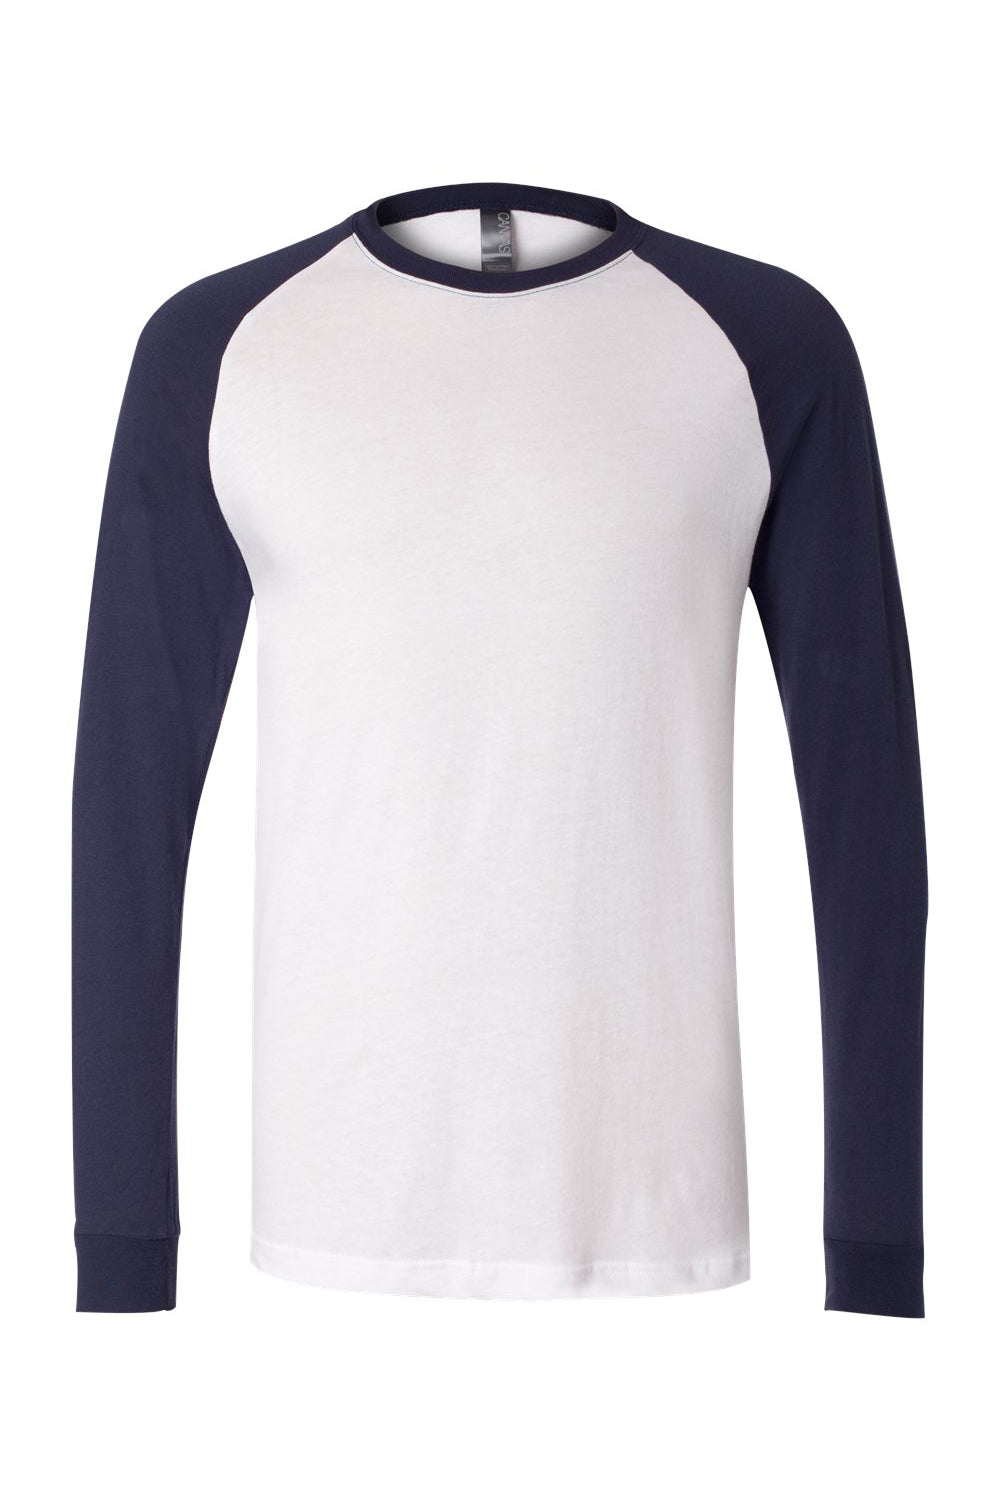 Bella + Canvas 3000C/3000 Mens Jersey Long Sleeve Crewneck T-Shirt White/Navy Blue Flat Front